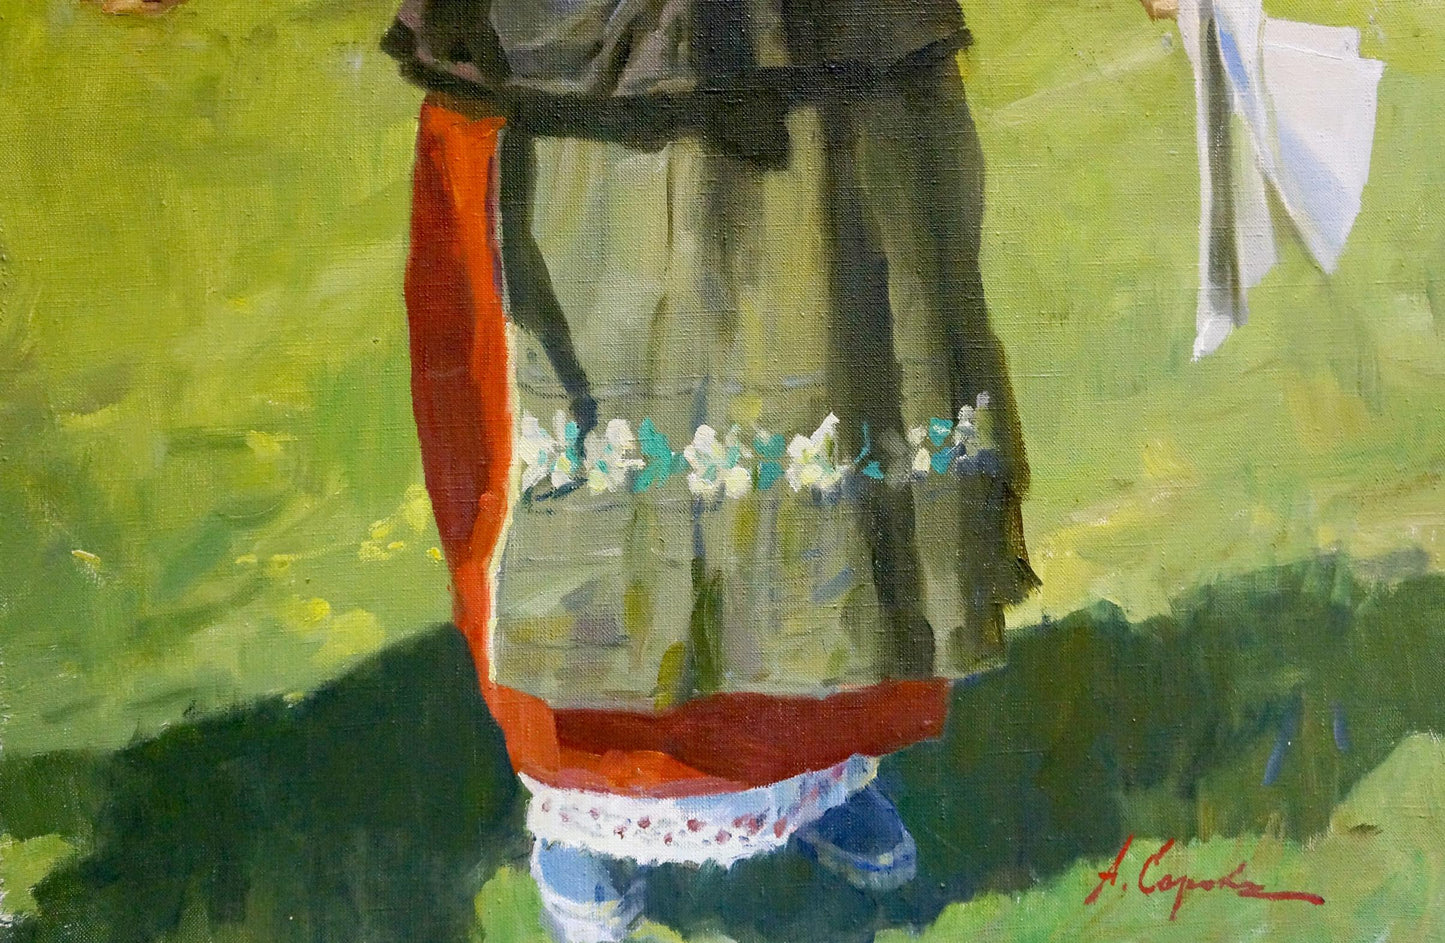 Arkady Vasilievich Soroka's oil painting portraying a grandmother's portrait